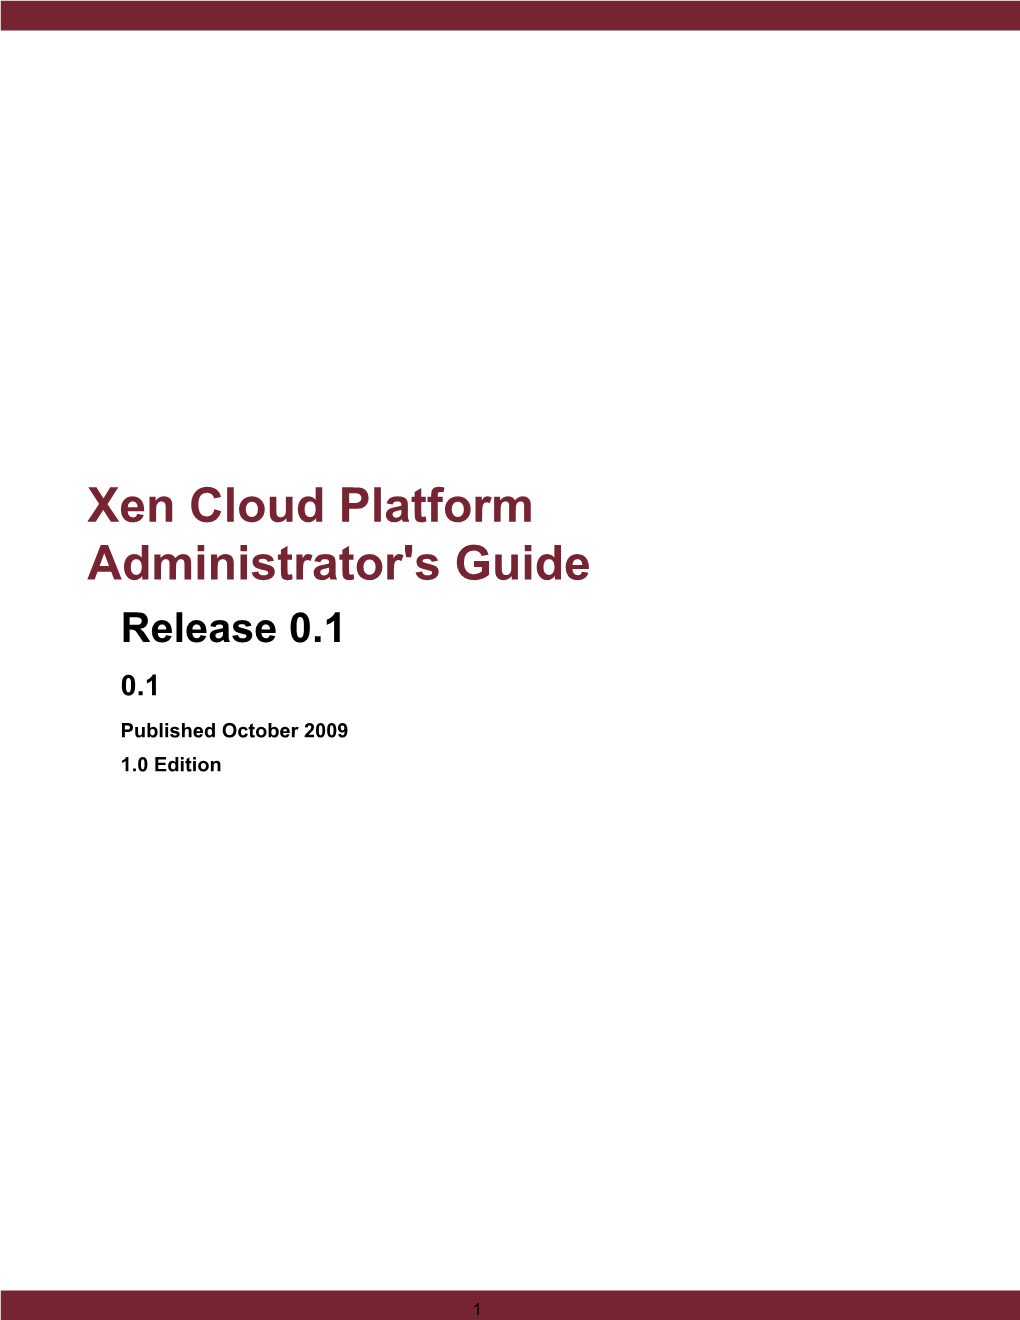 Xen Cloud Platform Administrator's Guide Release 0.1 0.1